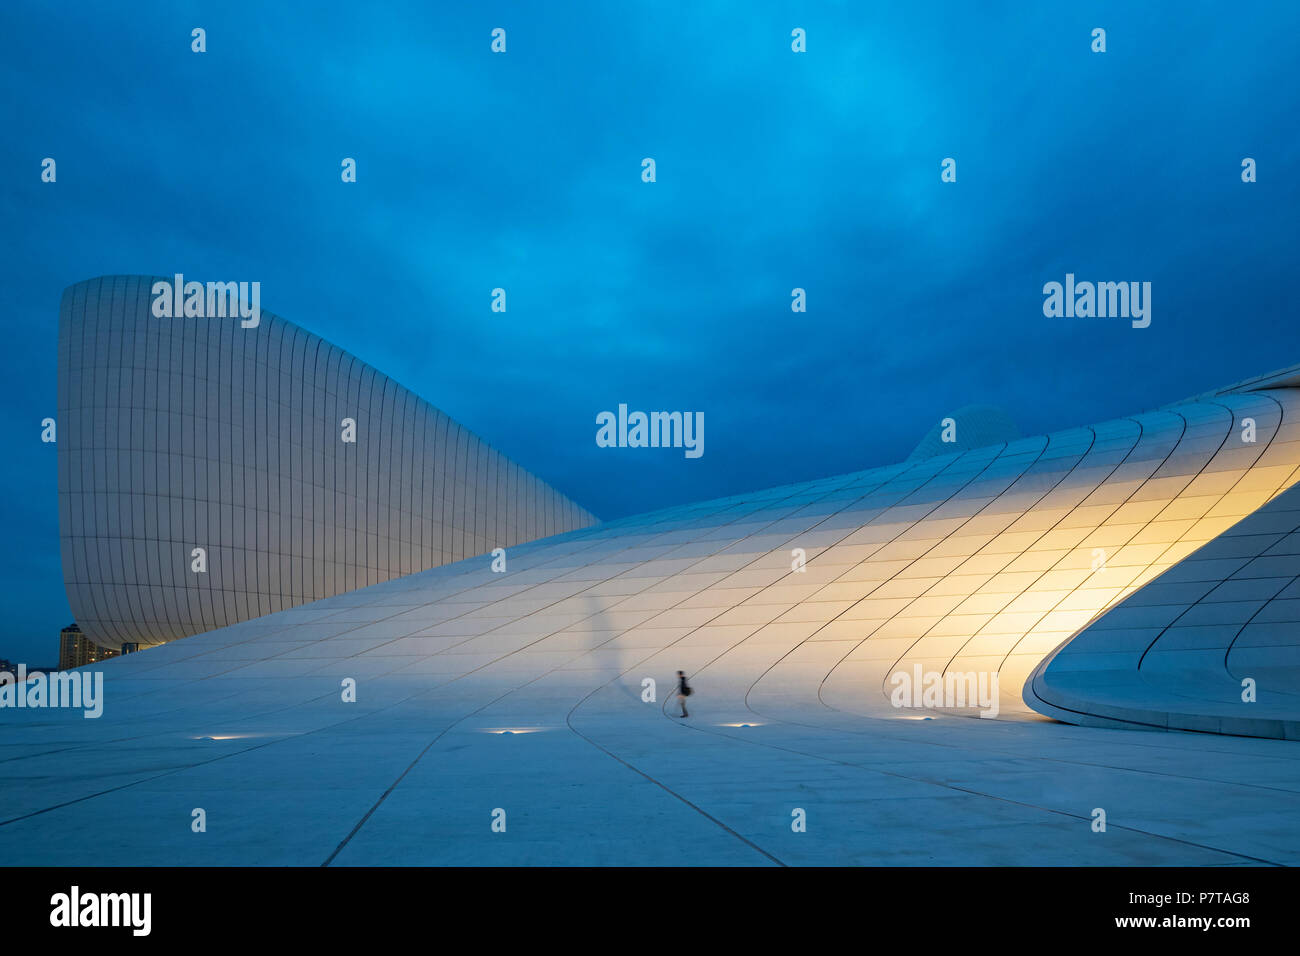 The Heydar Aliyev Center at night in Baku,Azerbaijan Stock Photo